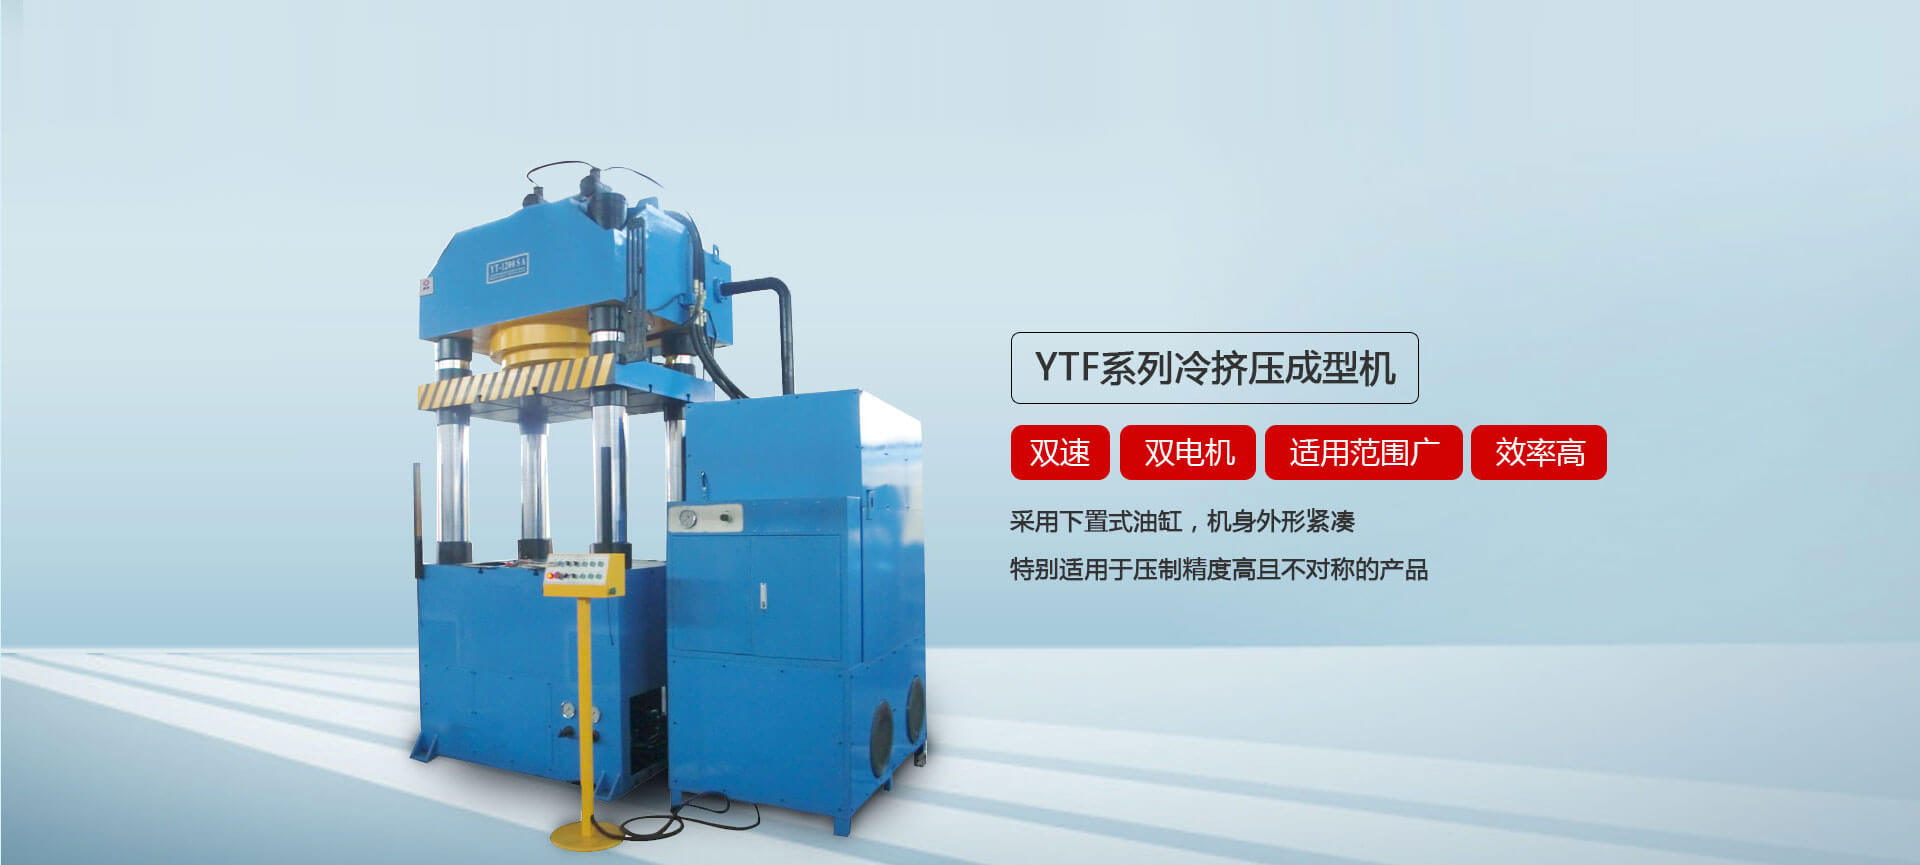 YTF系列冷挤压成型油压机